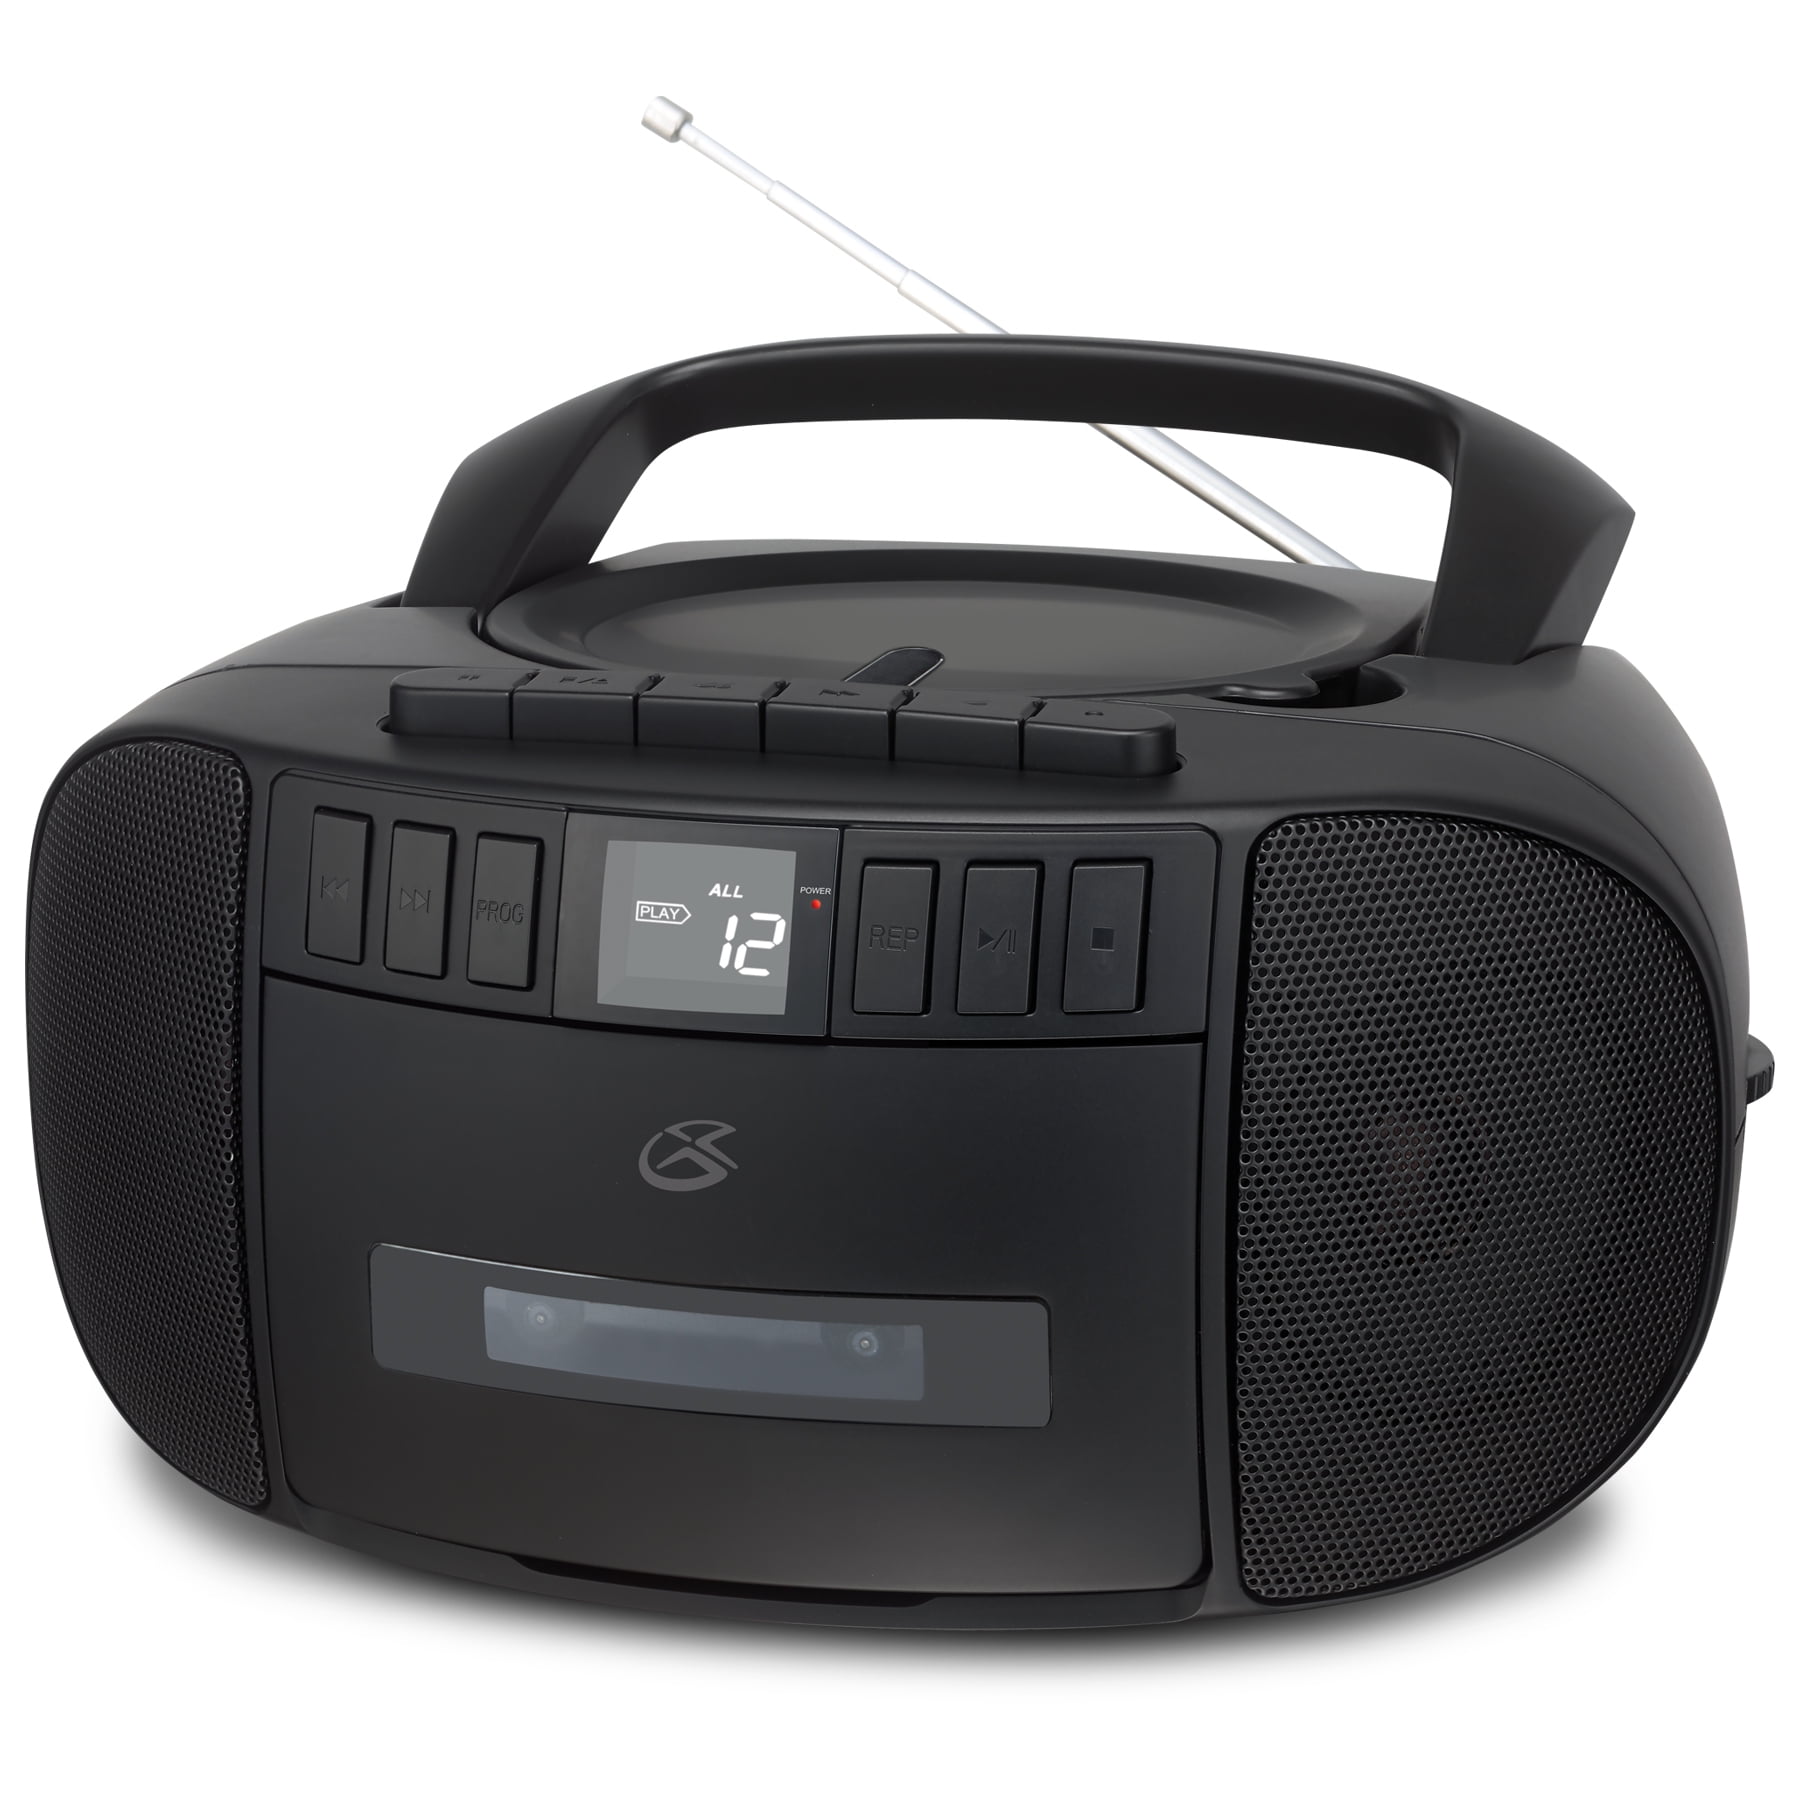 Gpx Radio Boombox With Cd And Cassette Bca209b Walmart Com